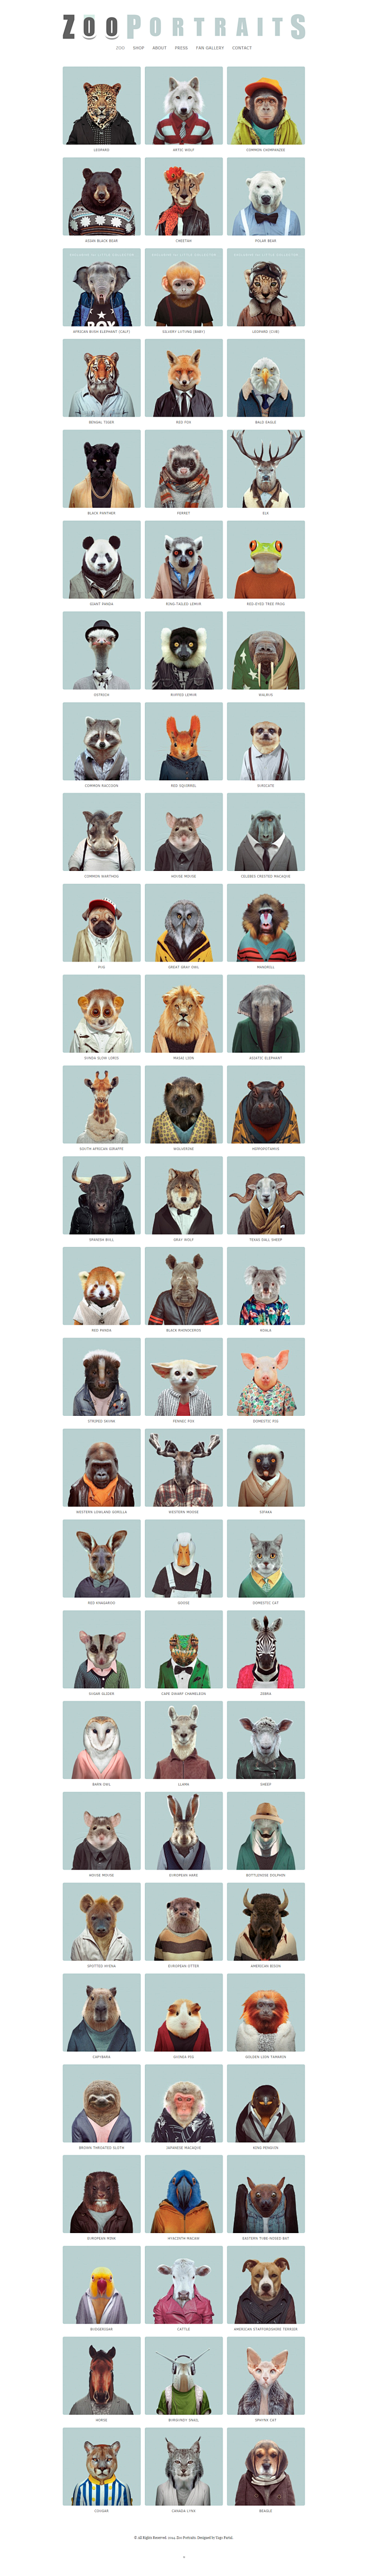 Zoo Portraits by Yag...